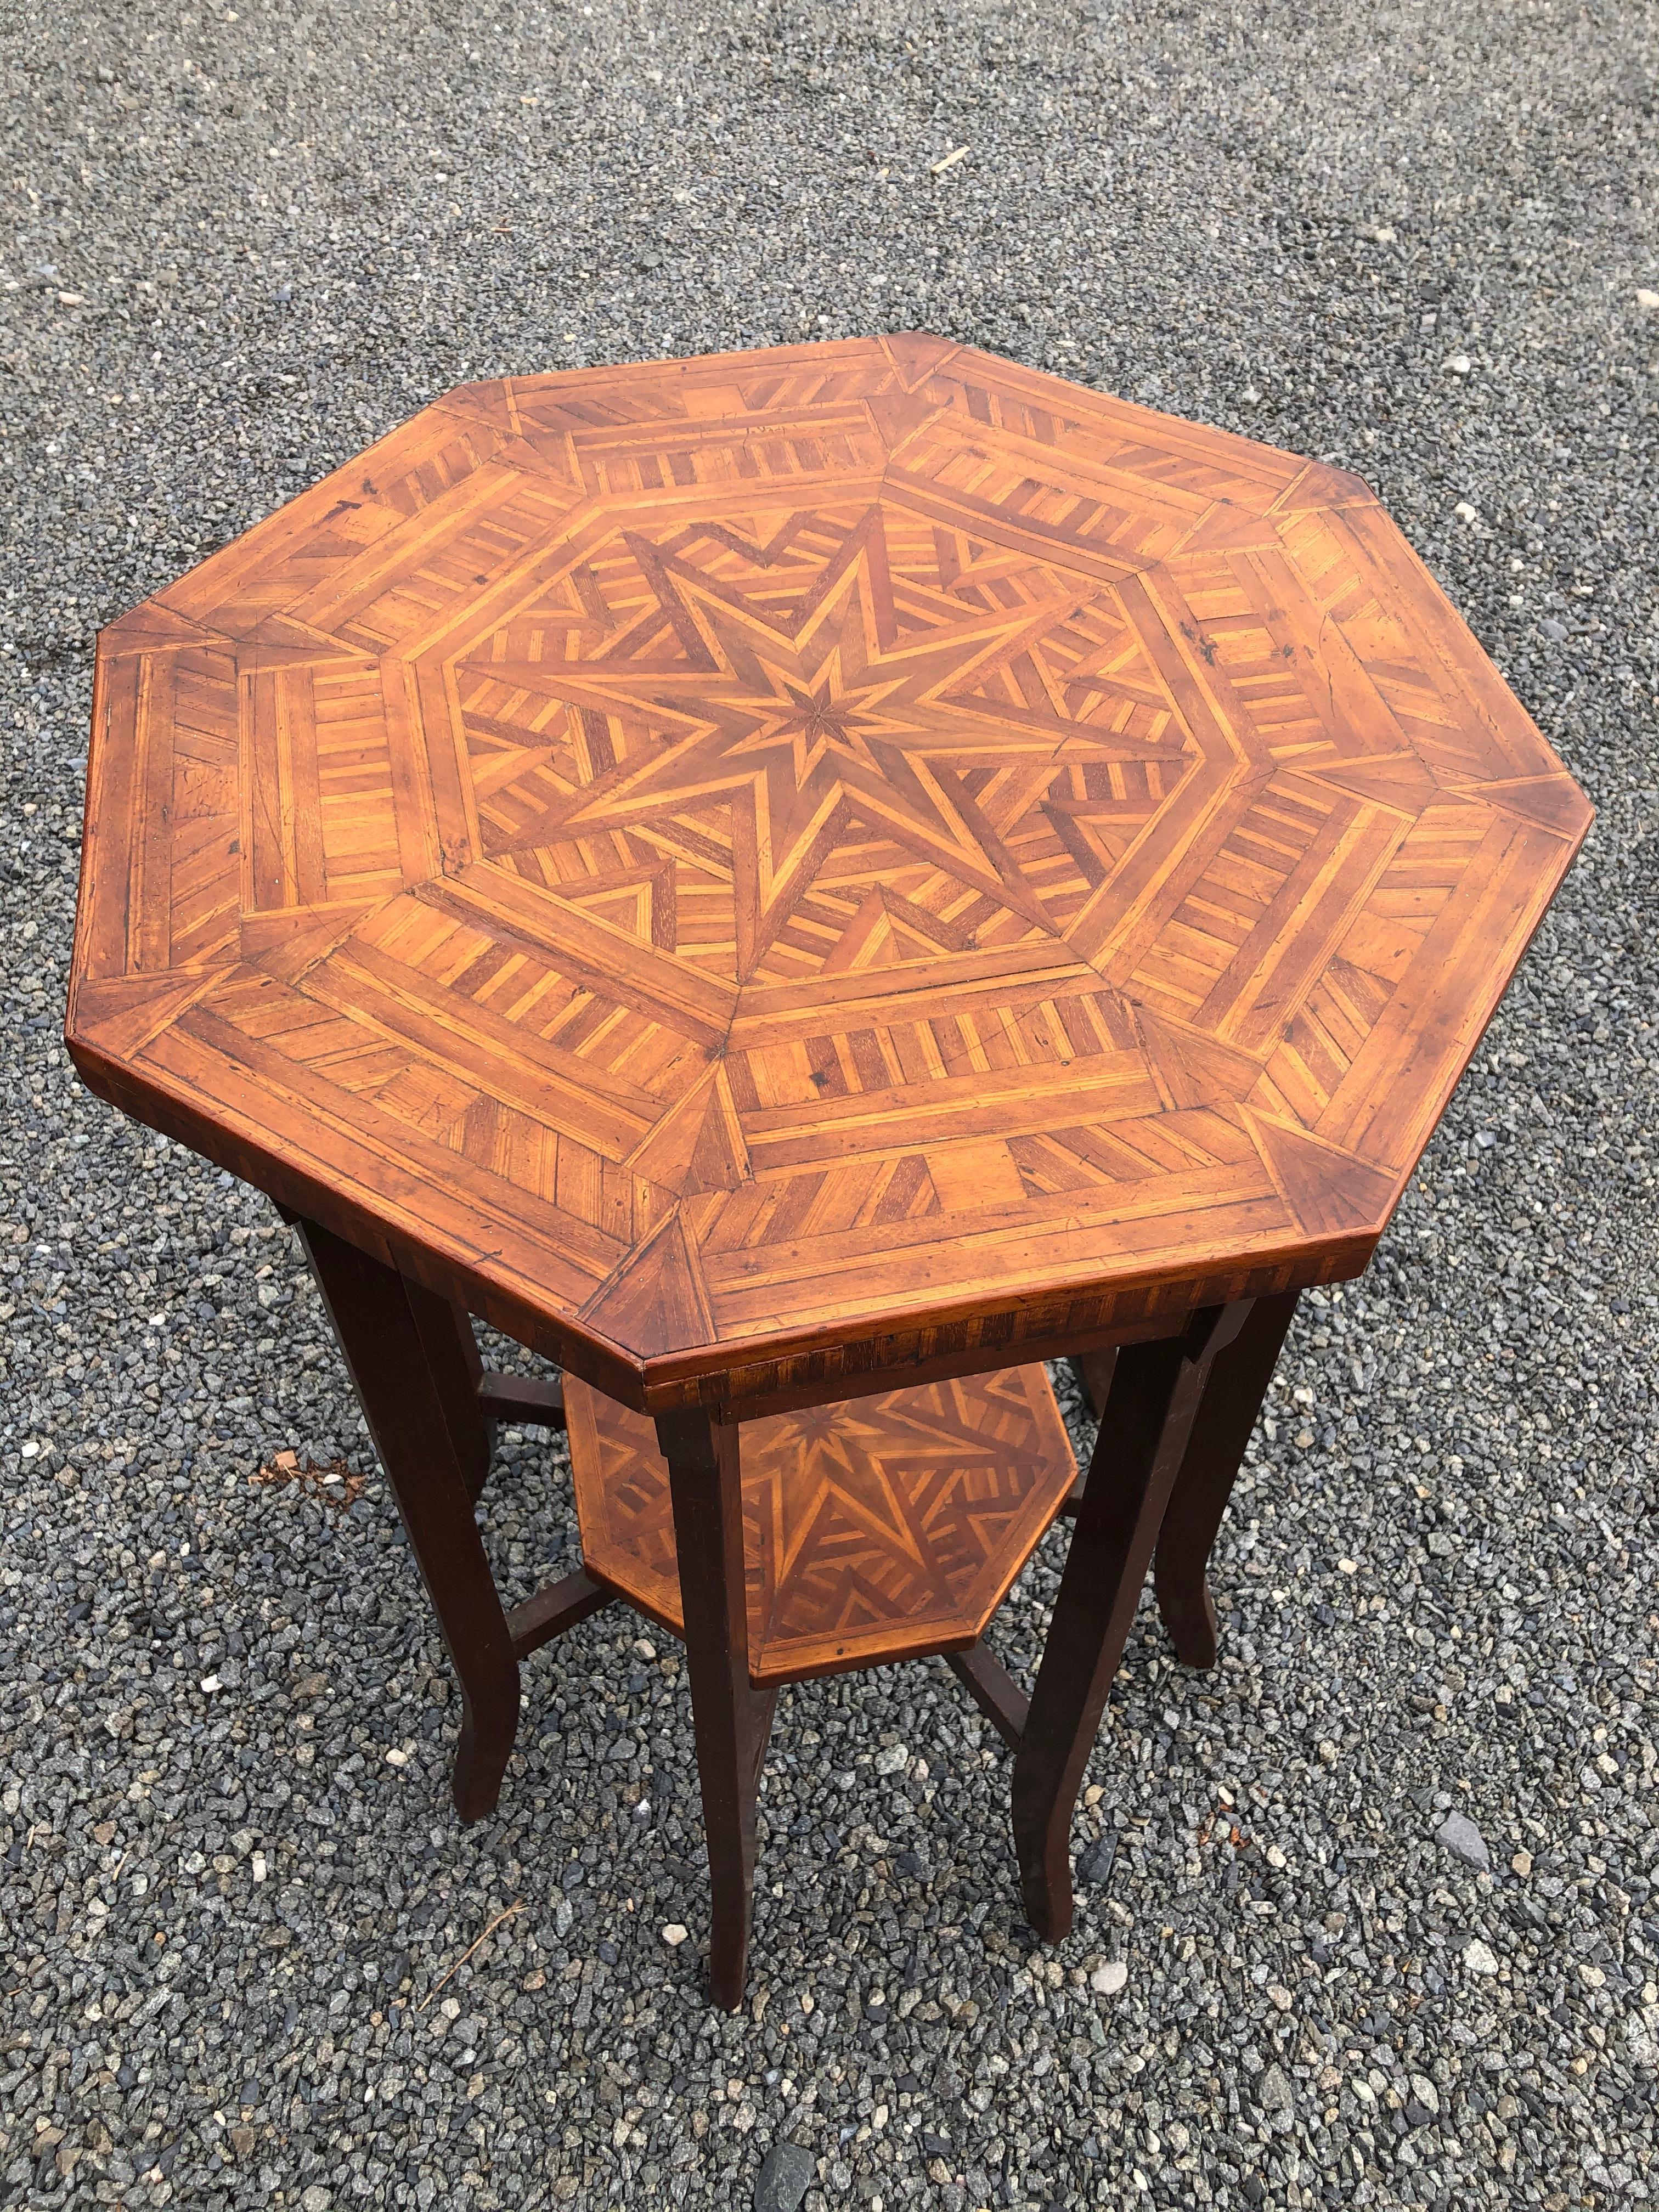 Elegant Antique Octagonal Side End Table with Inlaid Starburst Design 1